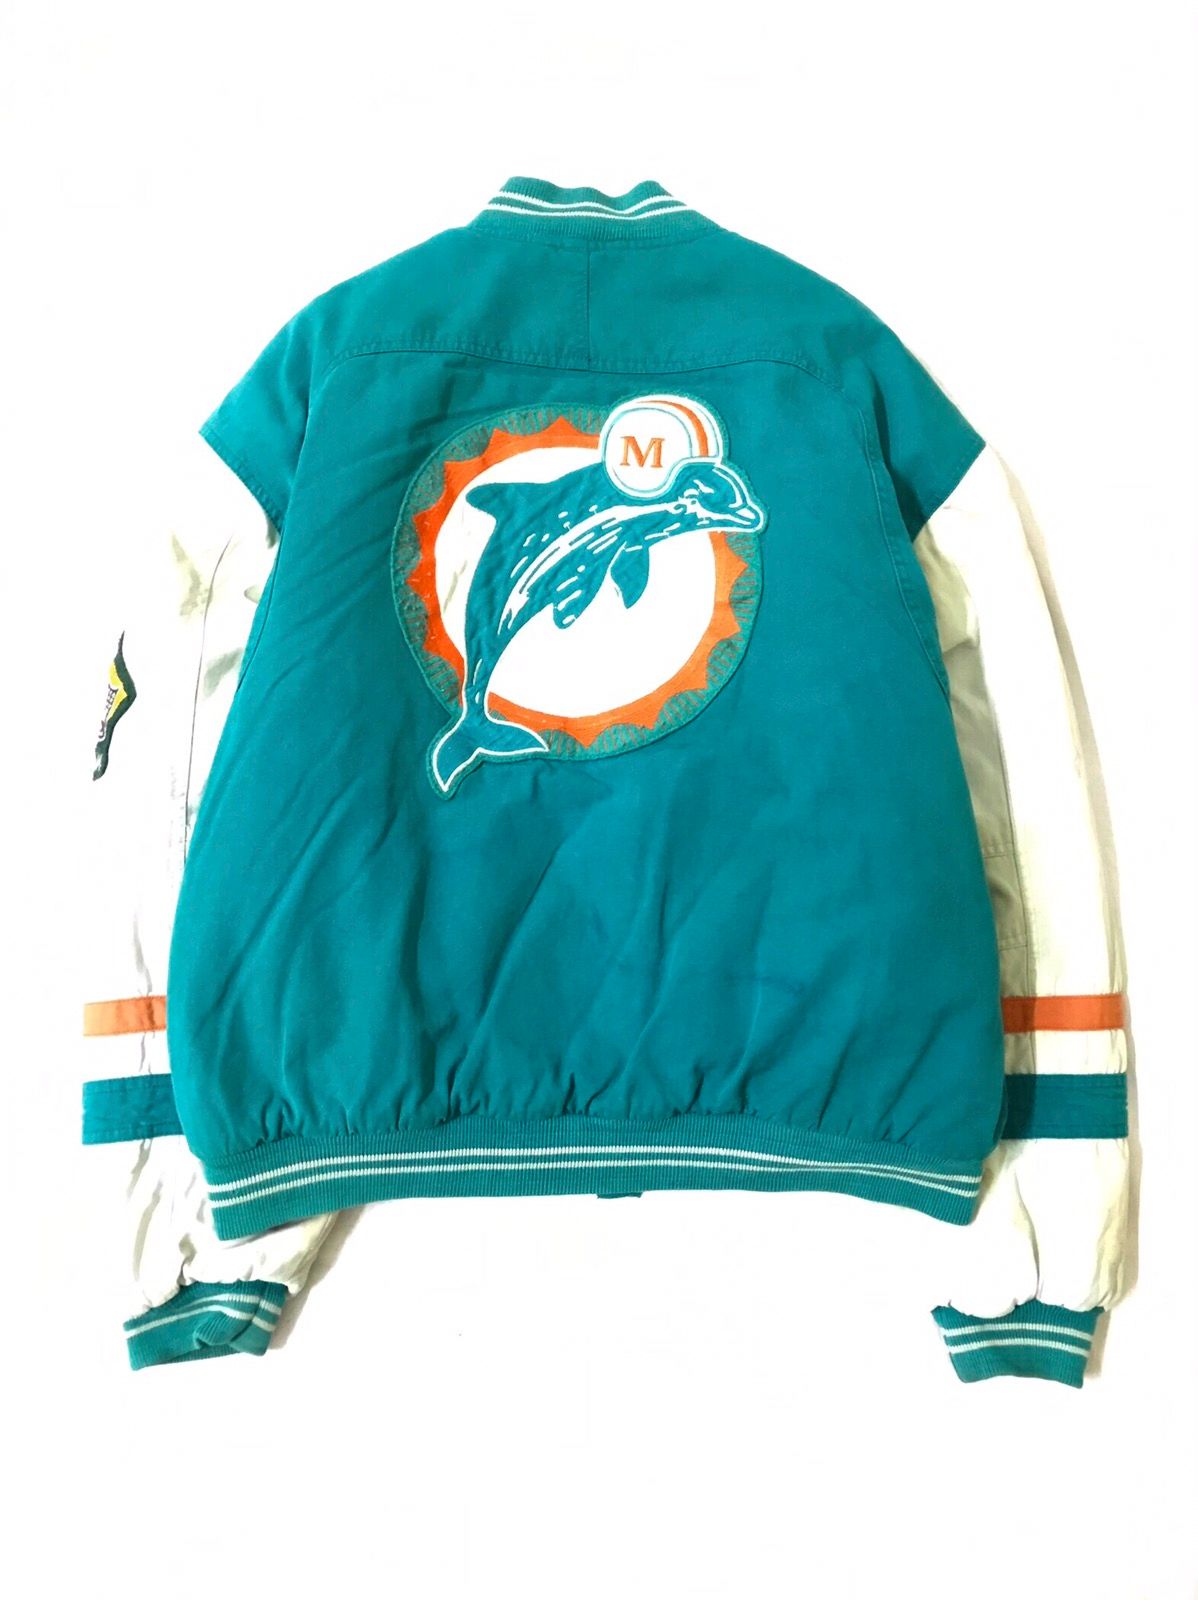 Vintage 90s MIAMI DOLPHIN NFL Team Jacket Size US M / EU 48-50 / 2 - 8 Thumbnail